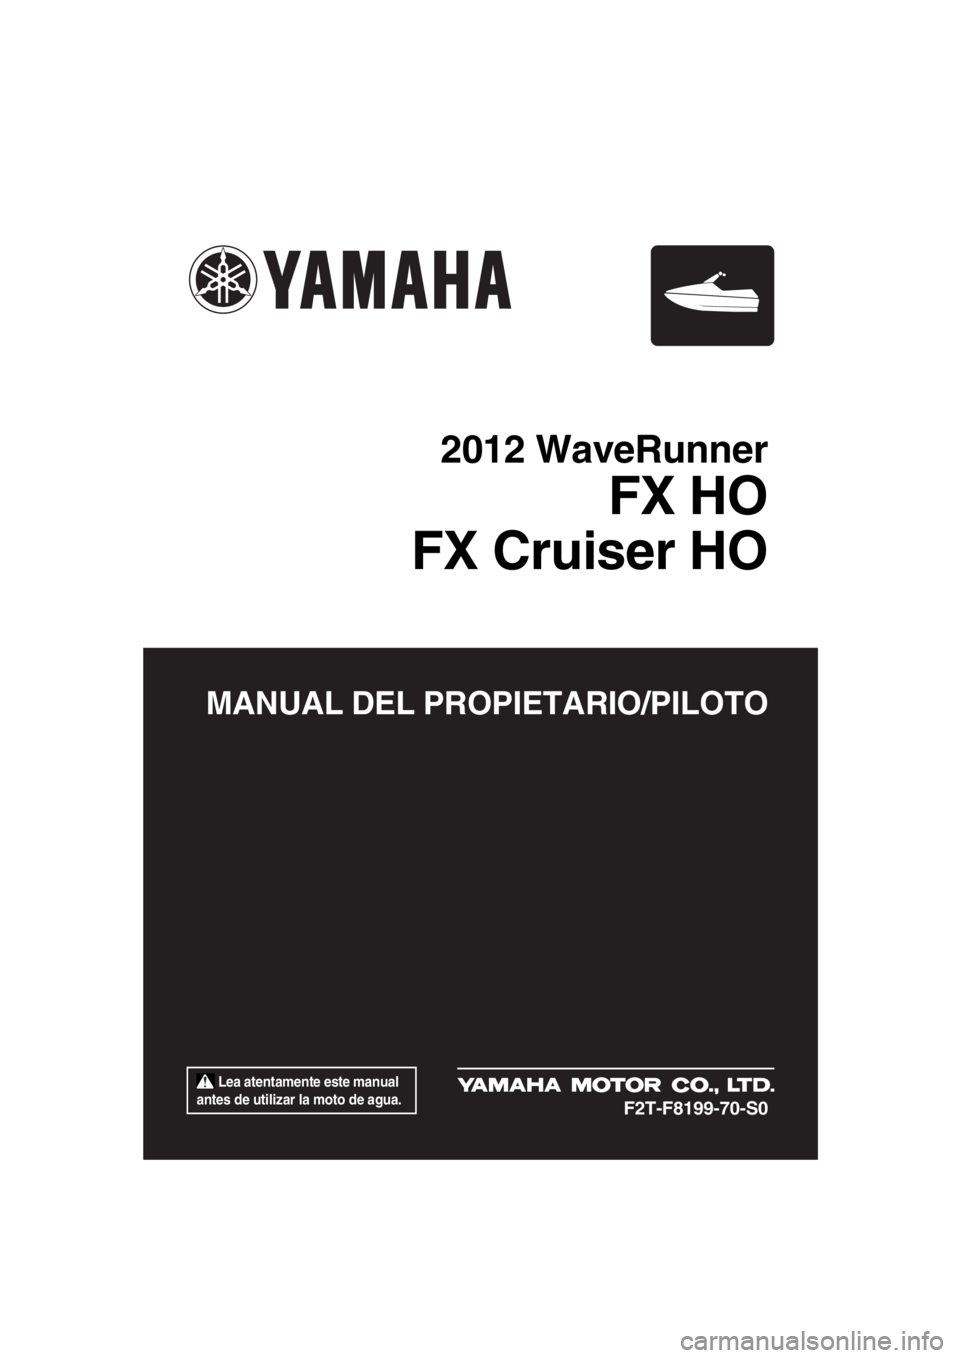 YAMAHA FX HO 2012  Manuale de Empleo (in Spanish) 